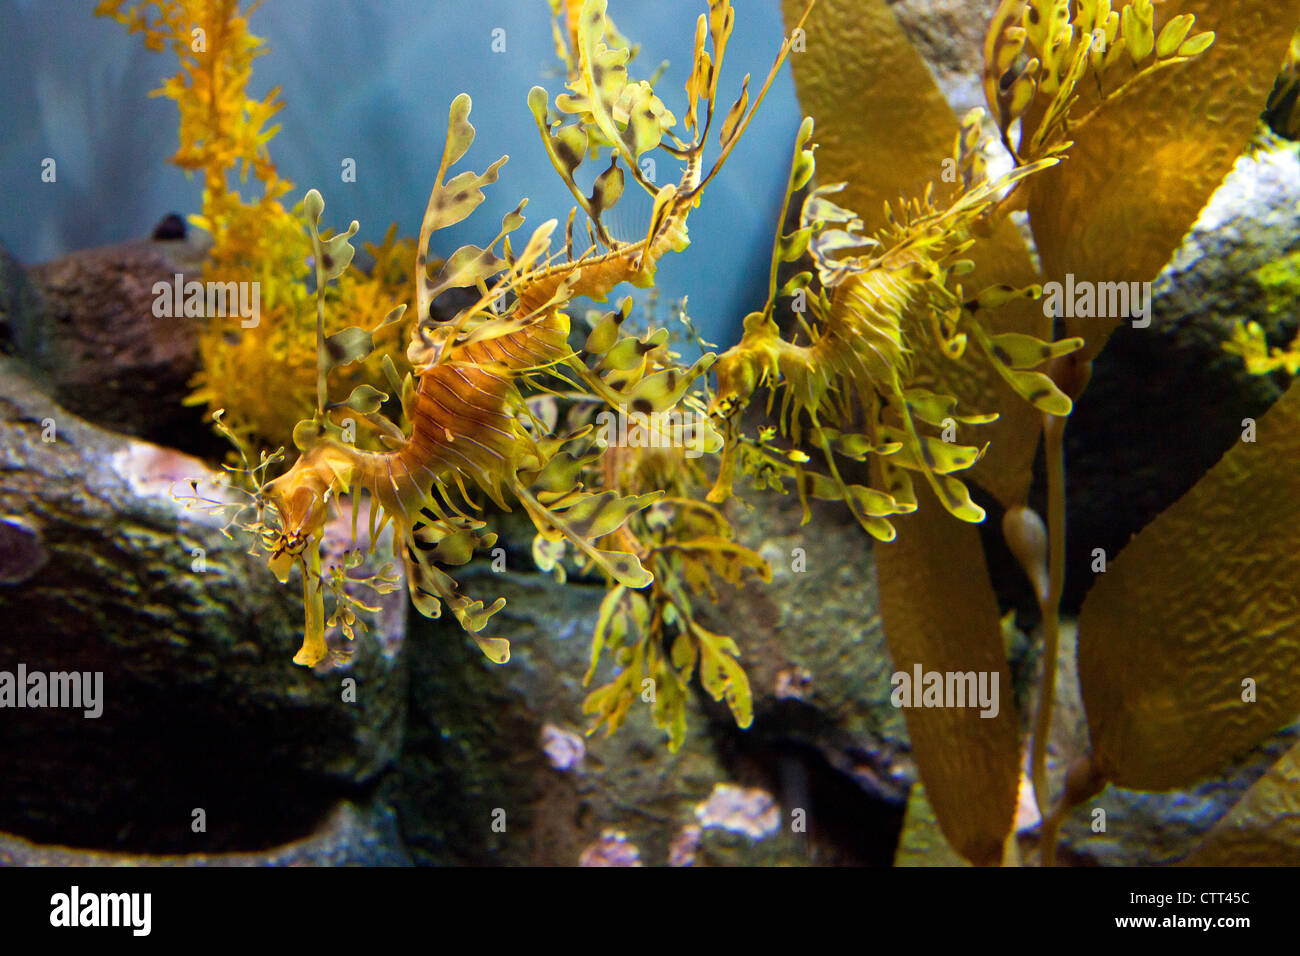 A Leafy Seadragon species of Seahorse Stock Photo